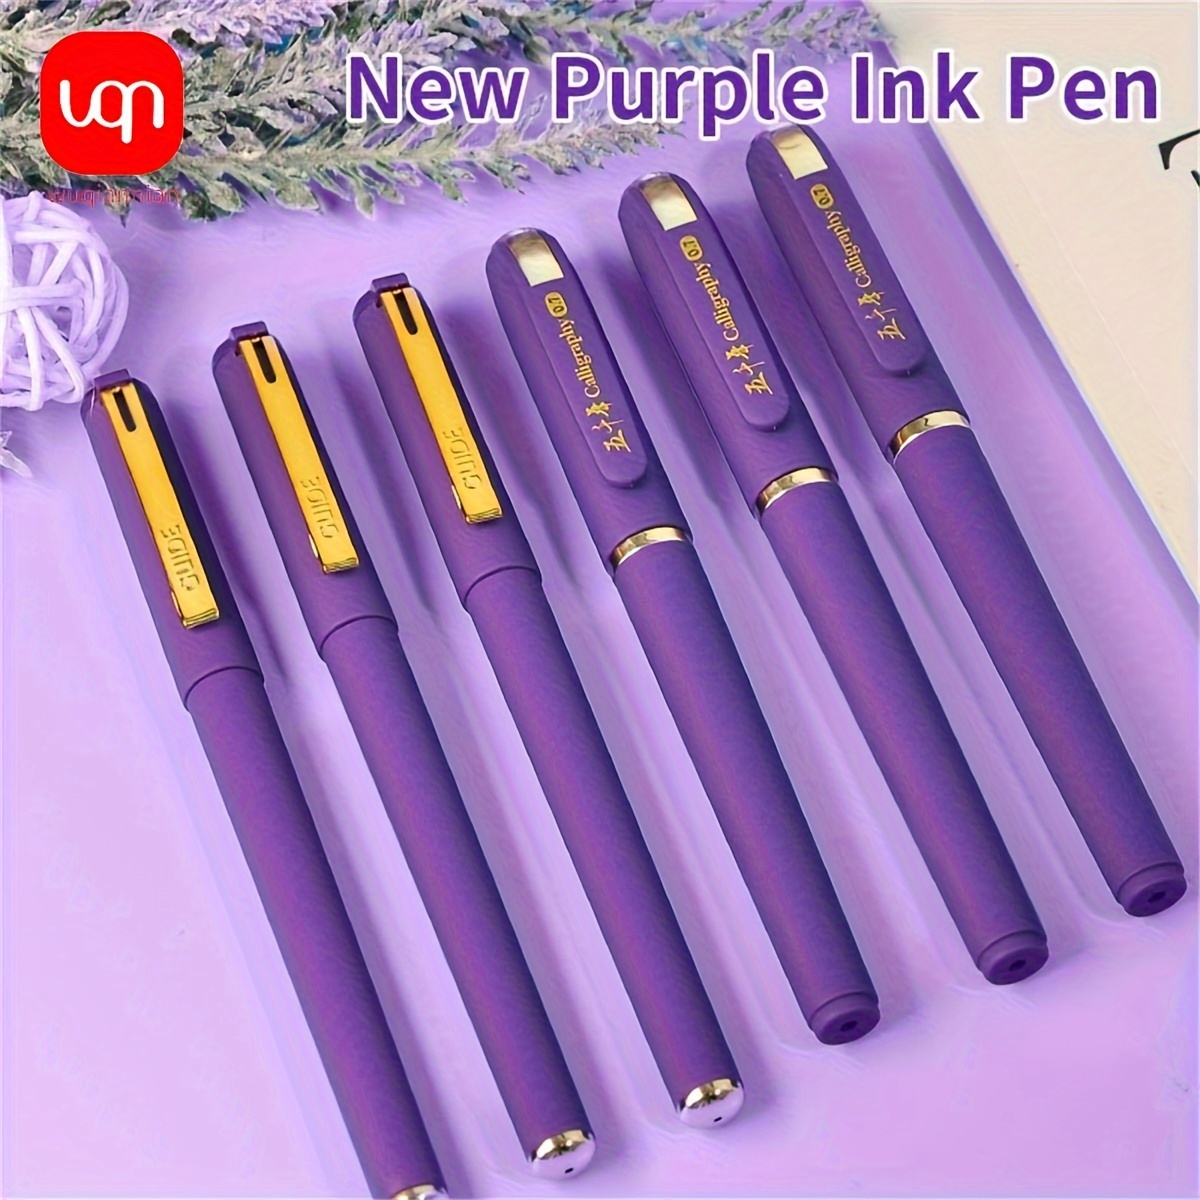 https://img.kwcdn.com/product/high-quality-purple-ink-gel-pens/d69d2f15w98k18-c9e3b1f8/Fancyalgo/VirtualModelMatting/eb87b0b07facbc52f99e322ec0266fa3.jpg